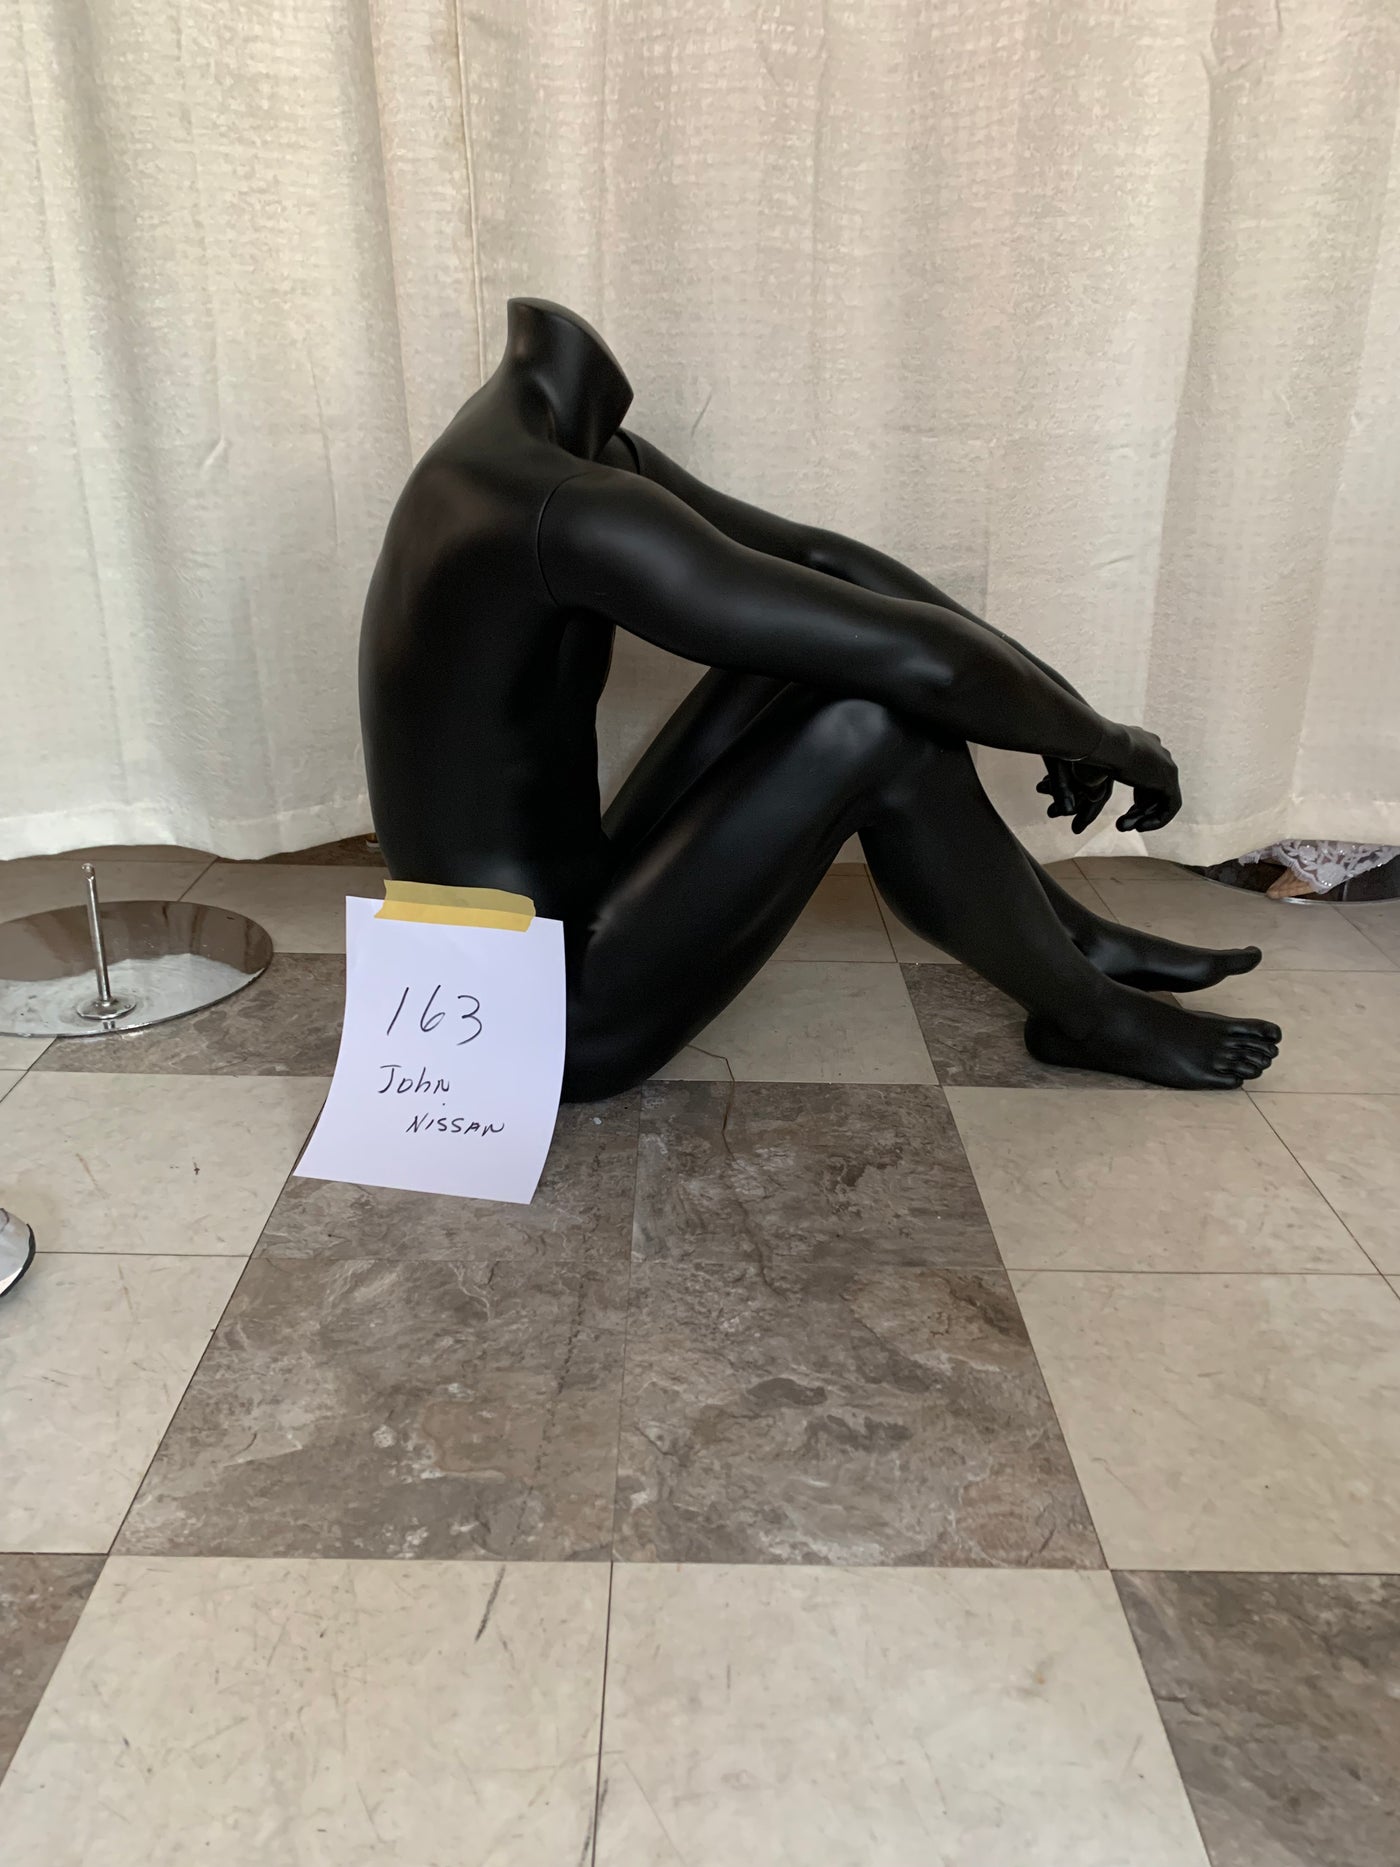 Used Seated Headless John Nissen Male Mannequin - #163  Black Color